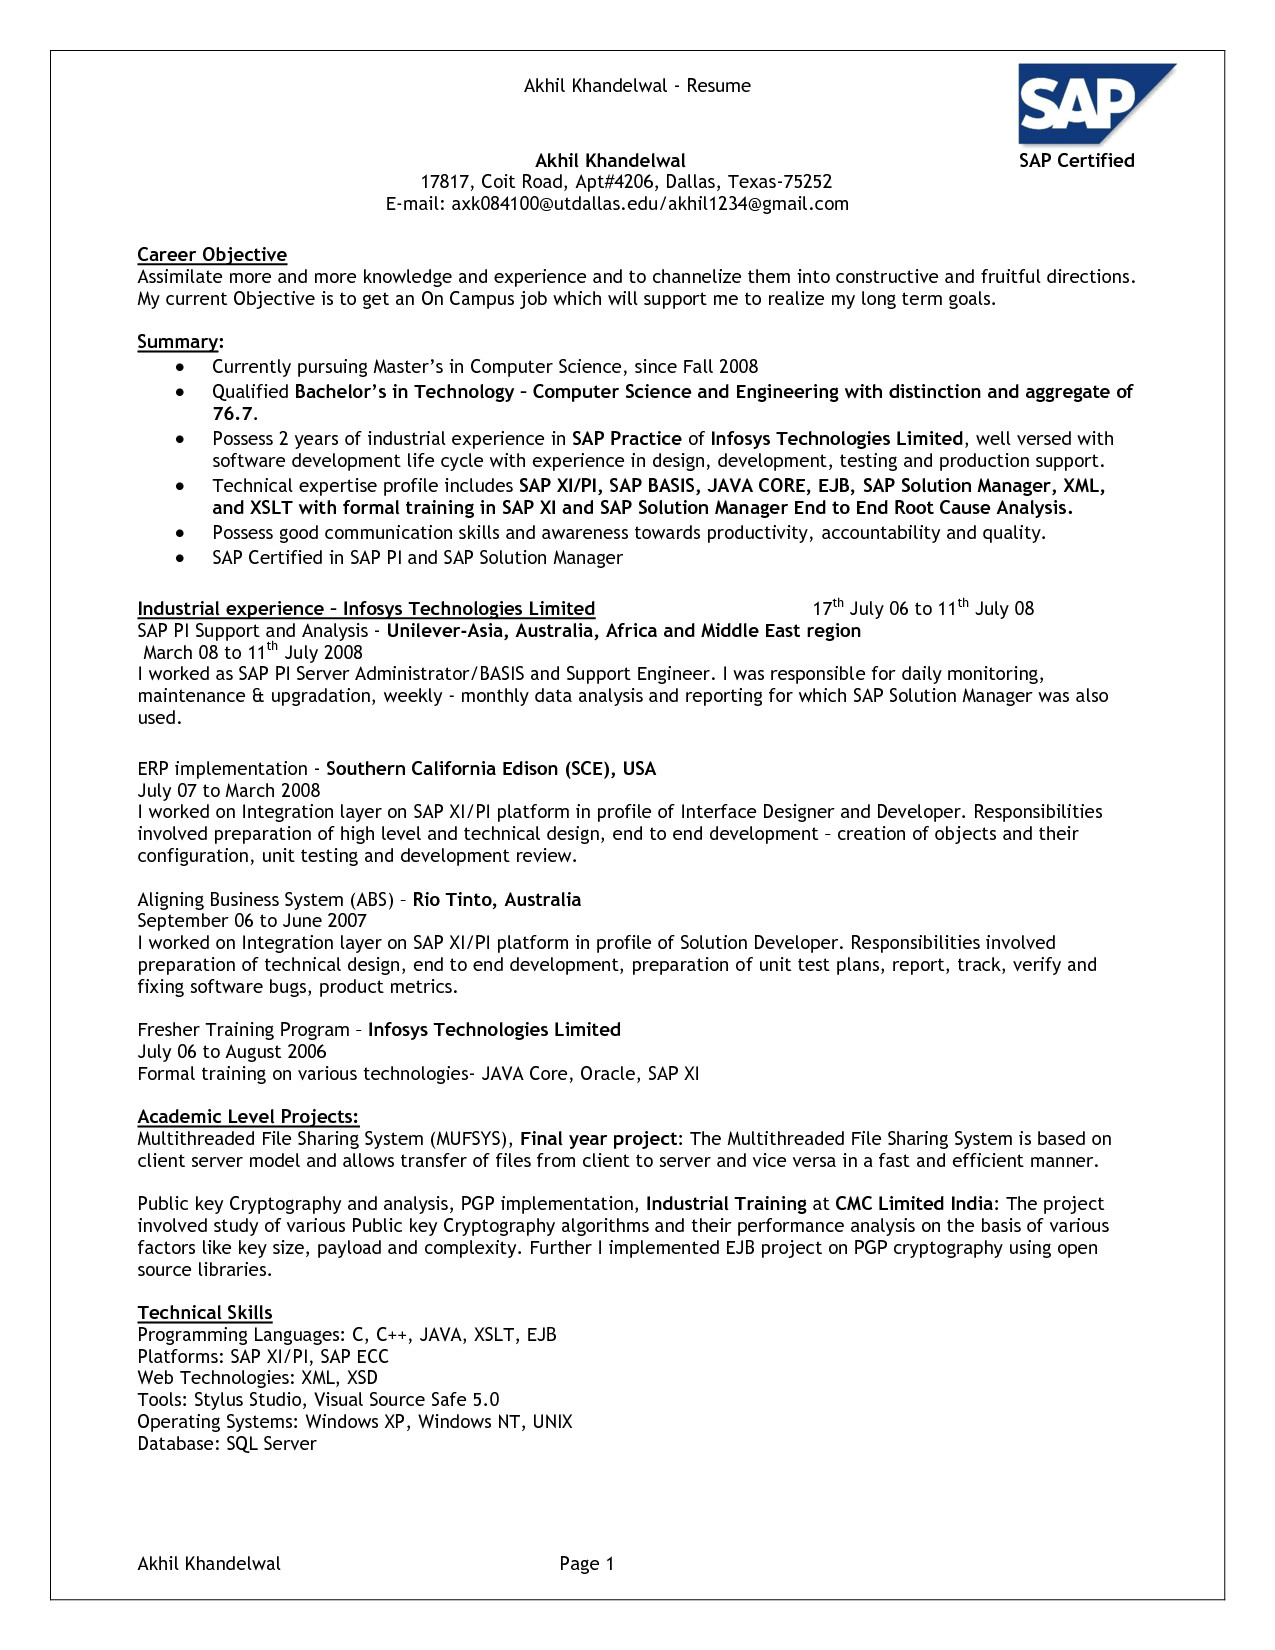 Sample Resume for Sap Sd Consultant Sap Sd Consultant Resume Sample Resume Ideas